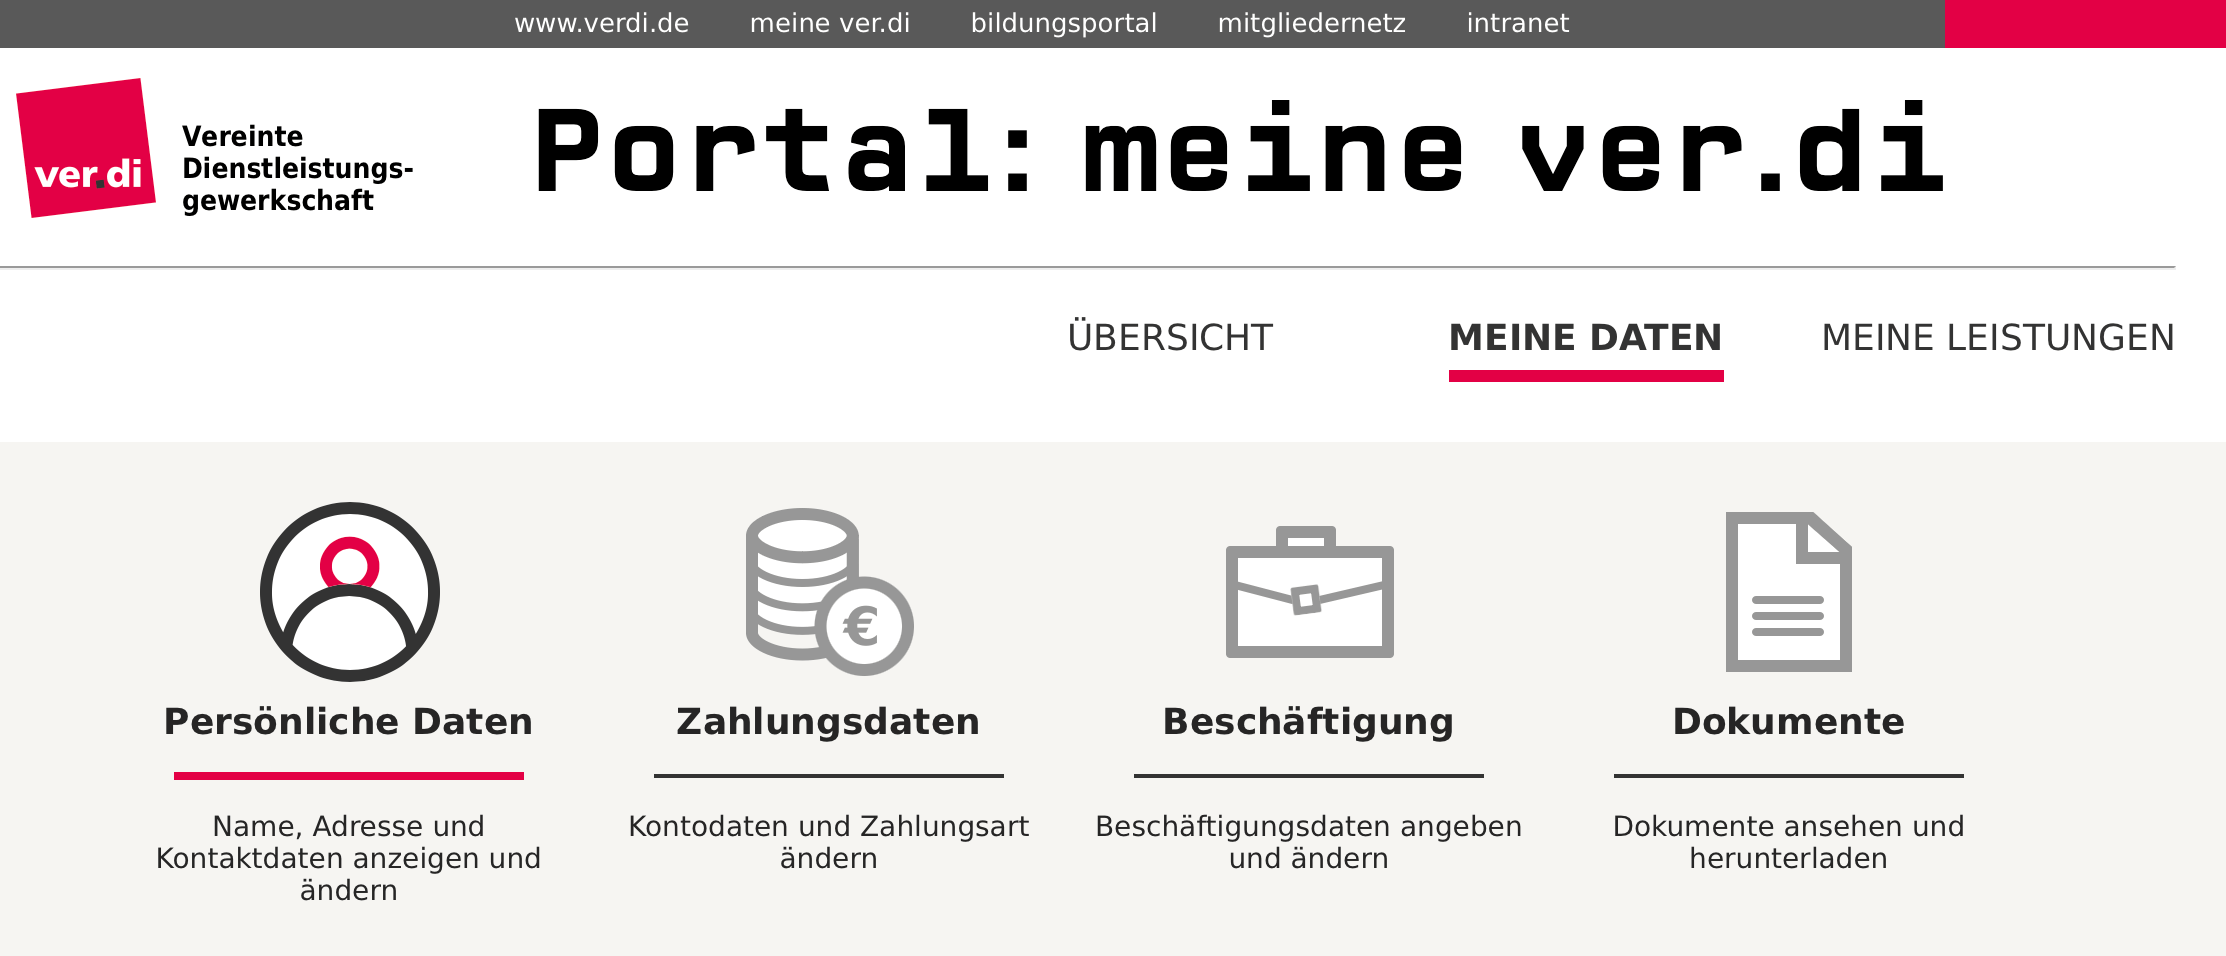 Portal: meine ver.di